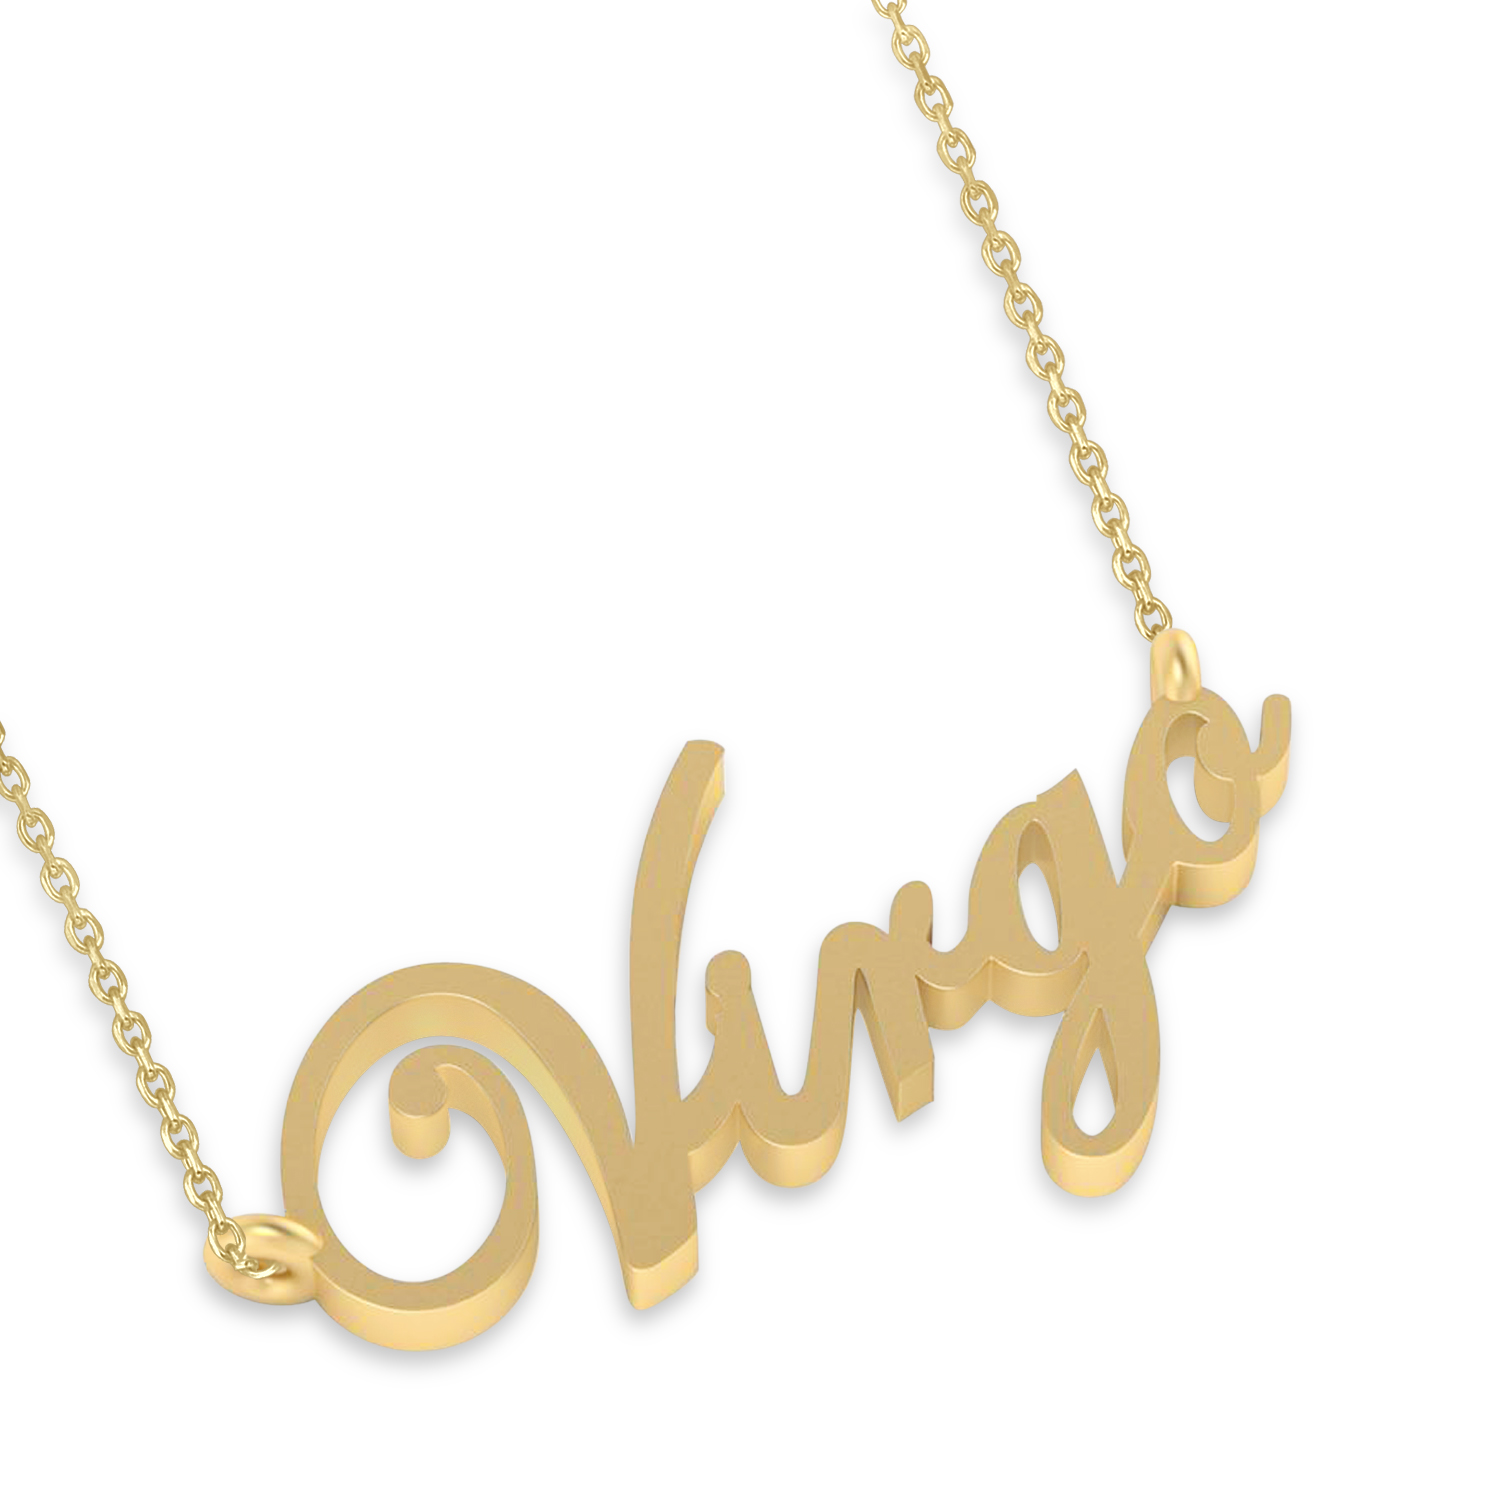 Virgo Zodiac Text Pendant Necklace 14k Yellow Gold